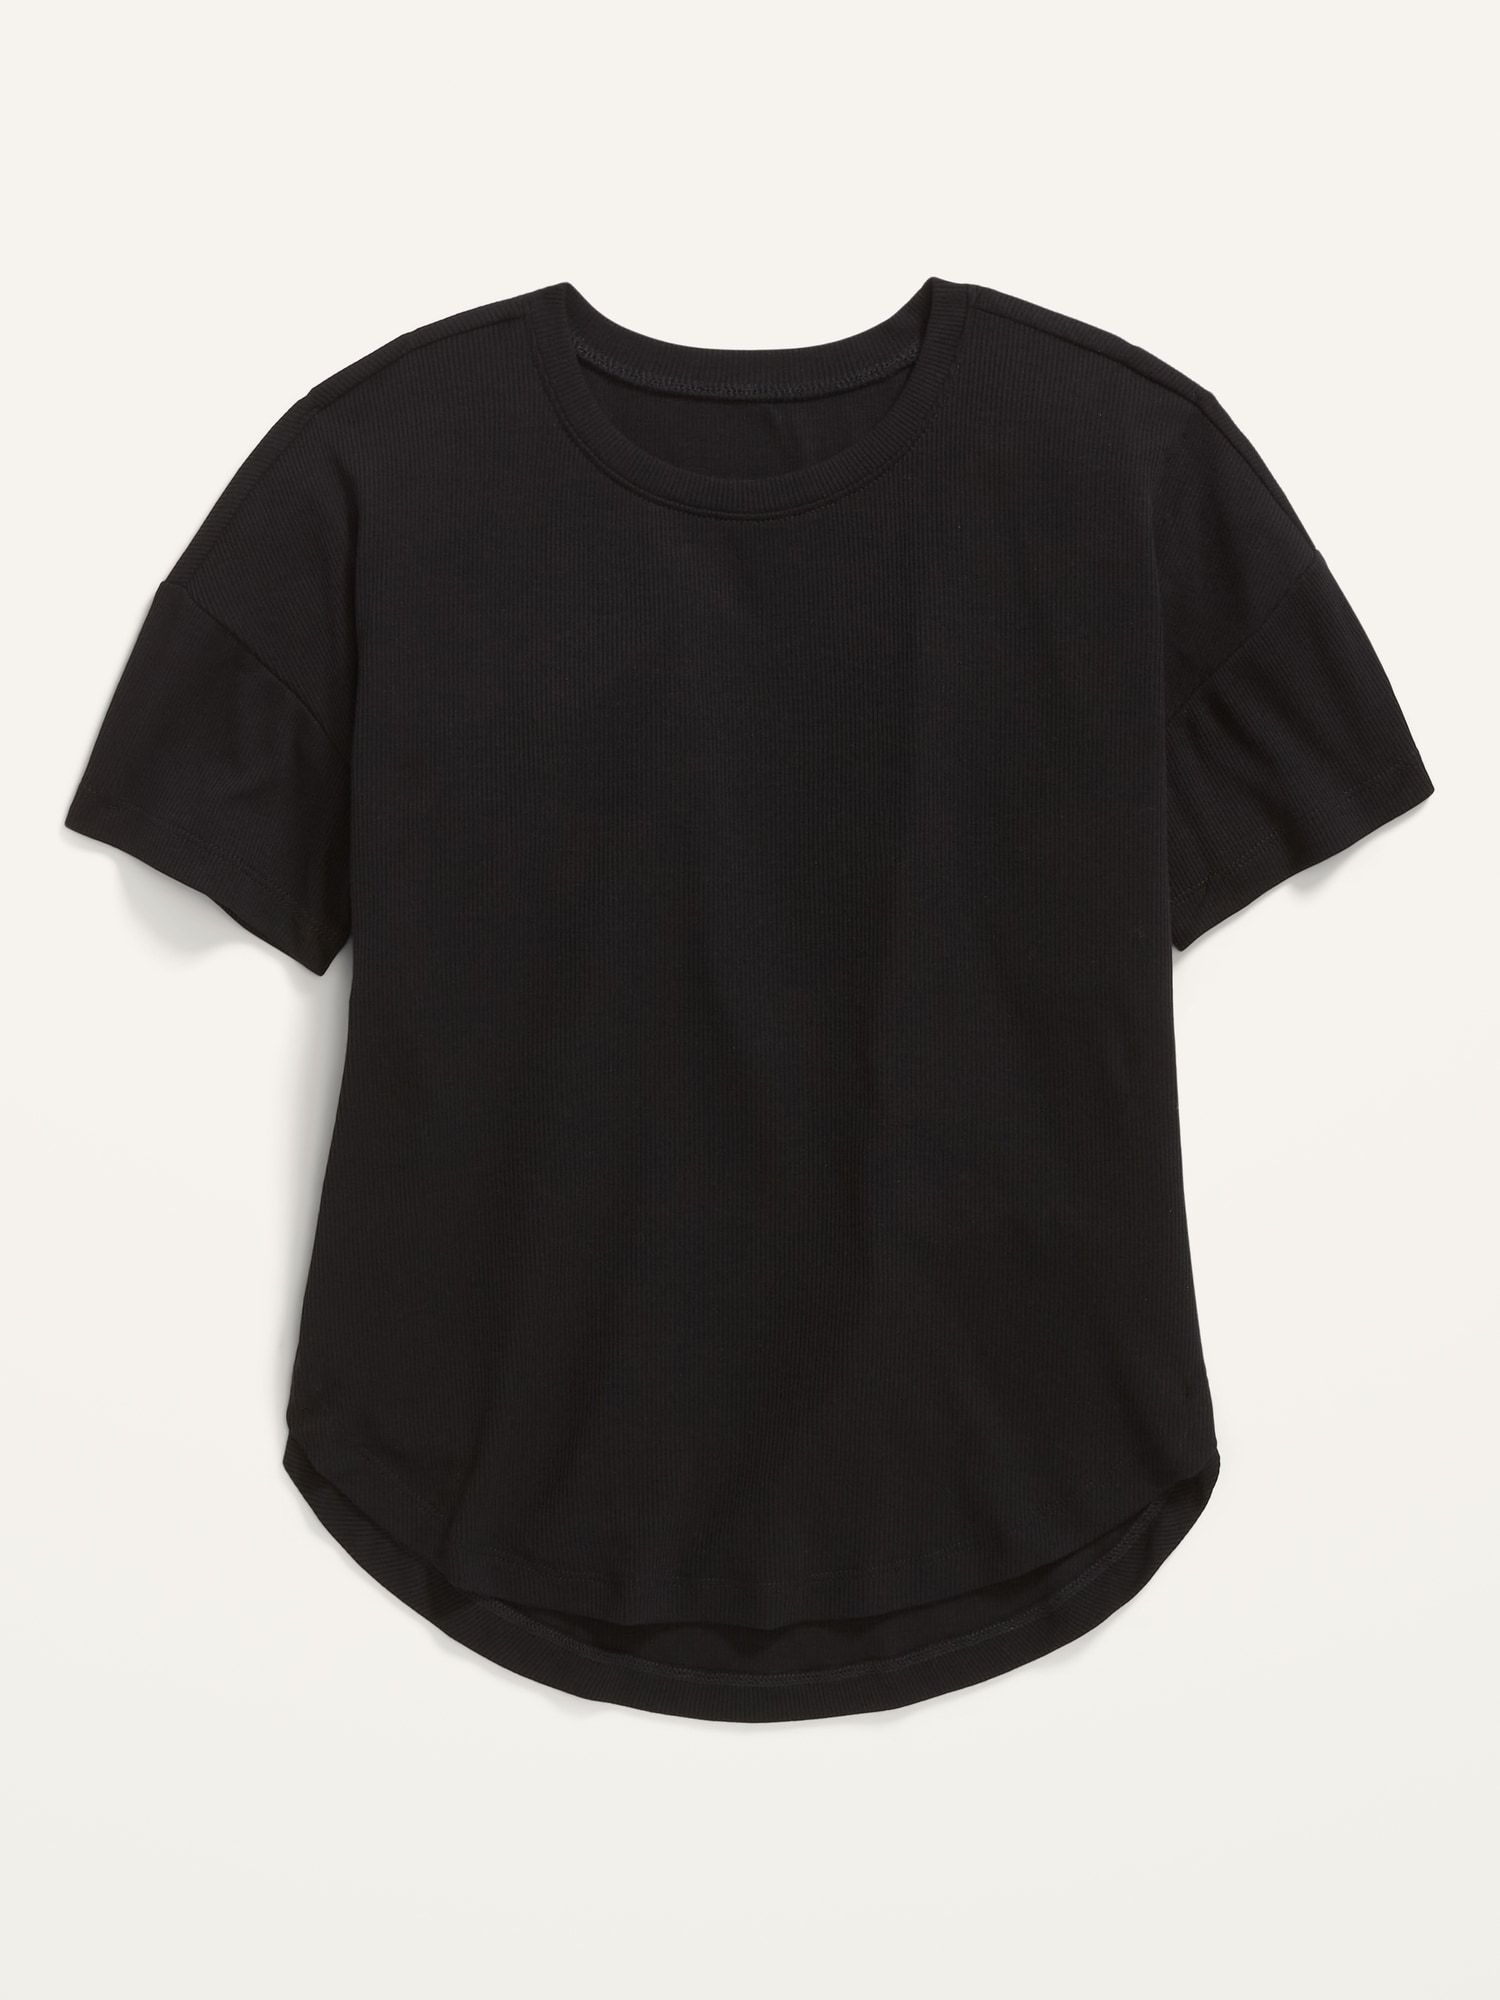 UltraLite Rib-Knit Tunic T-Shirt for Girls | Old Navy